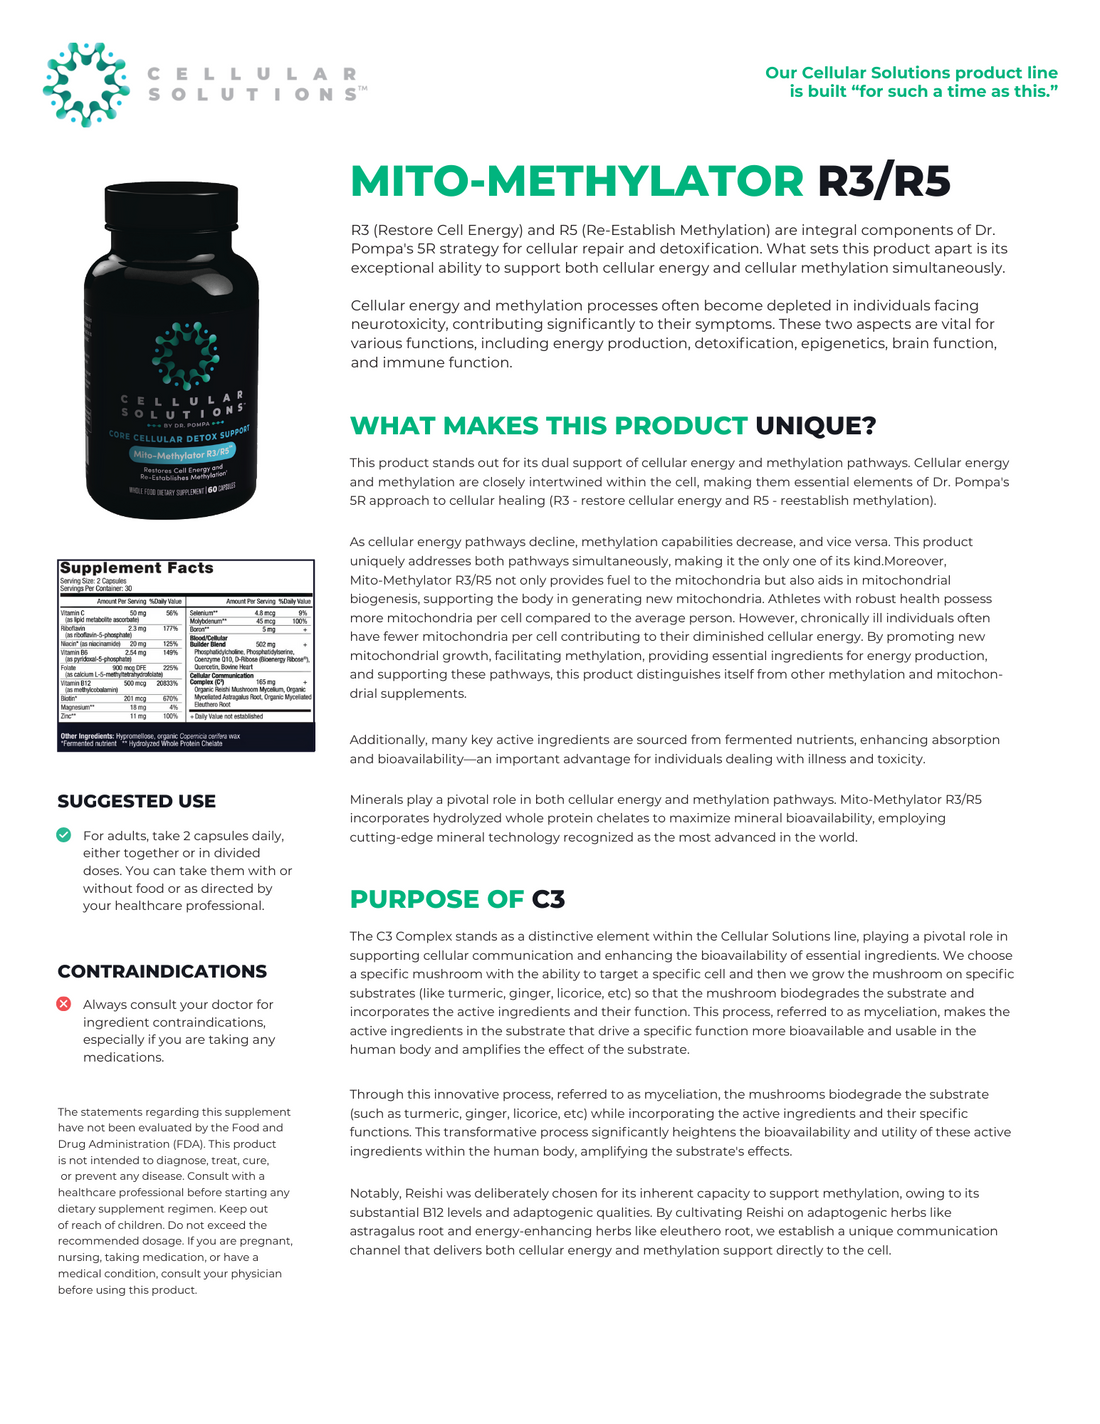 Mito-Methylator R3/R5